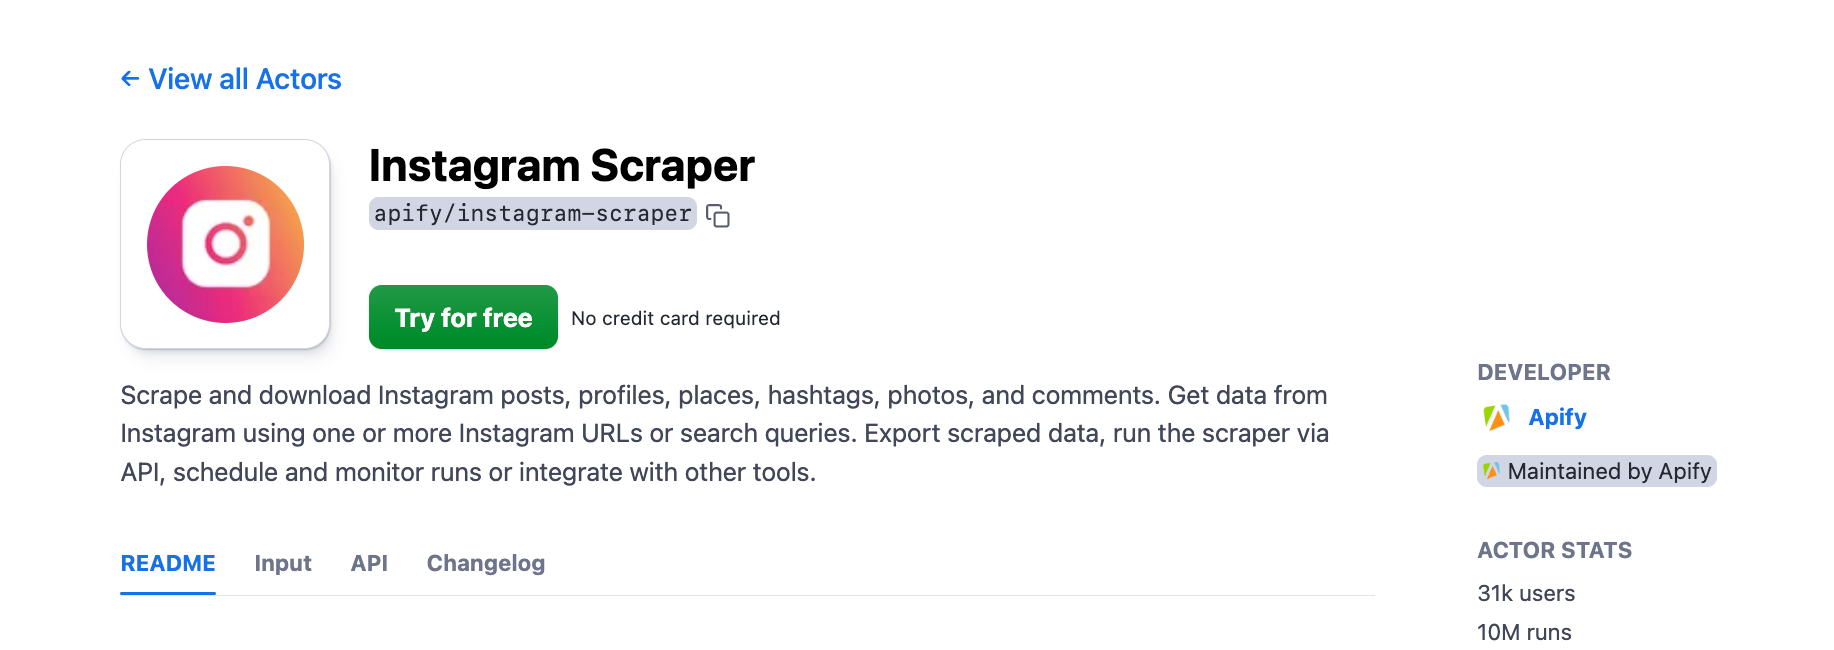 Step 1. Go to Instagram Scraper